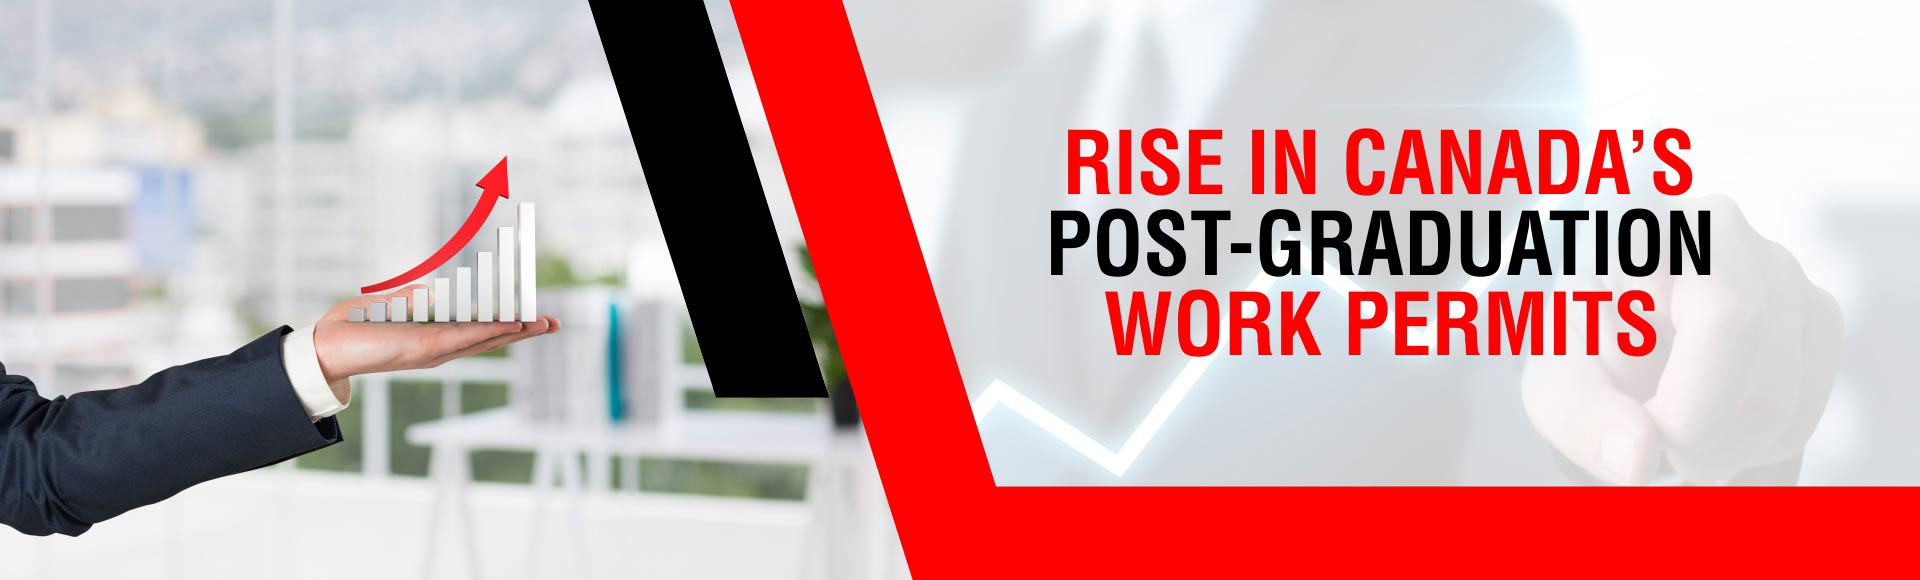 Rise in Canada’s Post-Graduation Work Permits